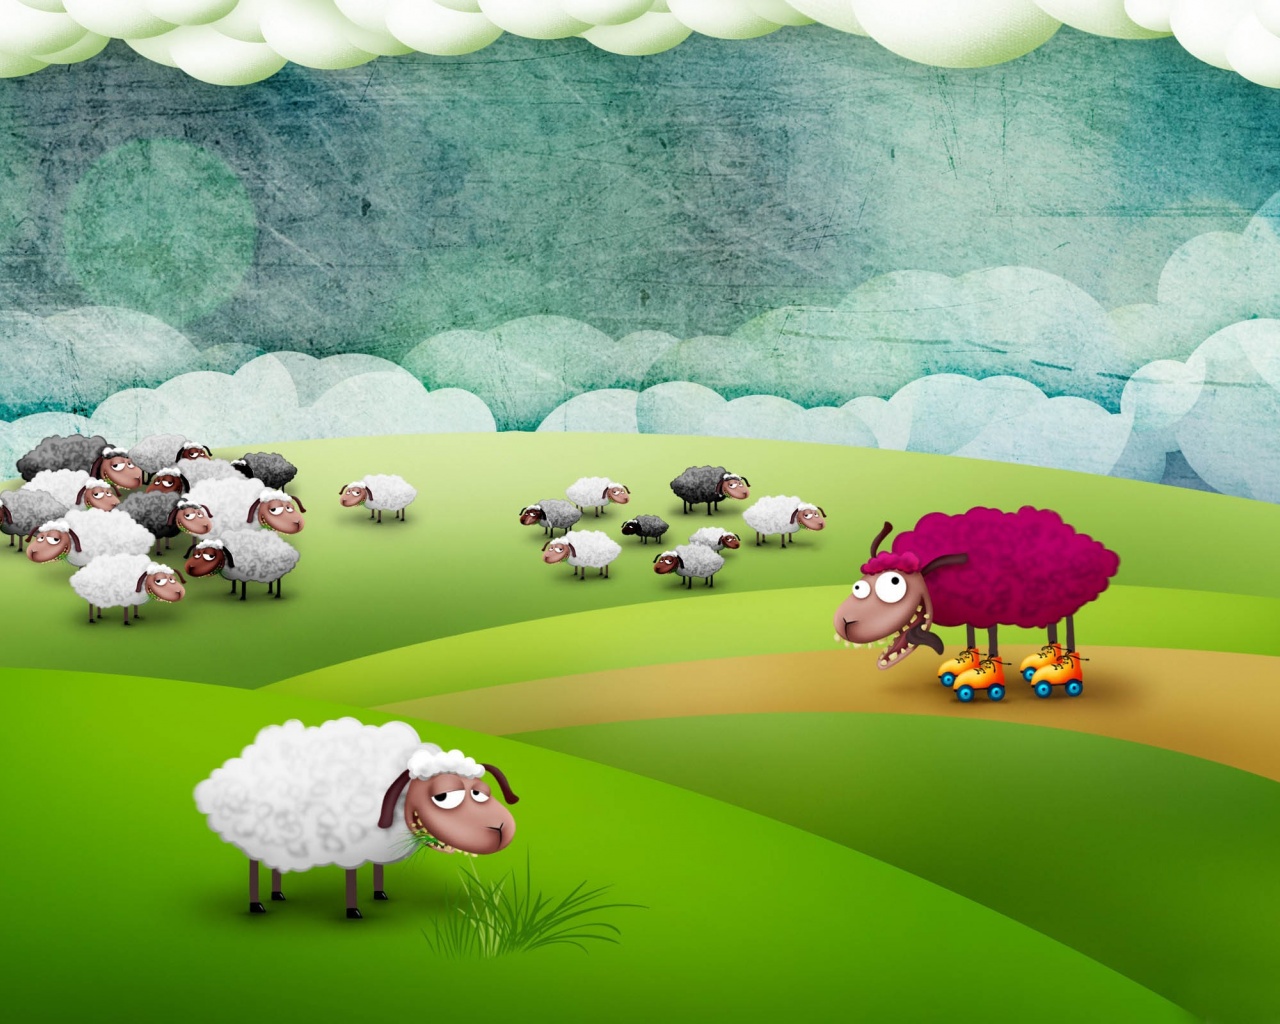 Funny Sheeps